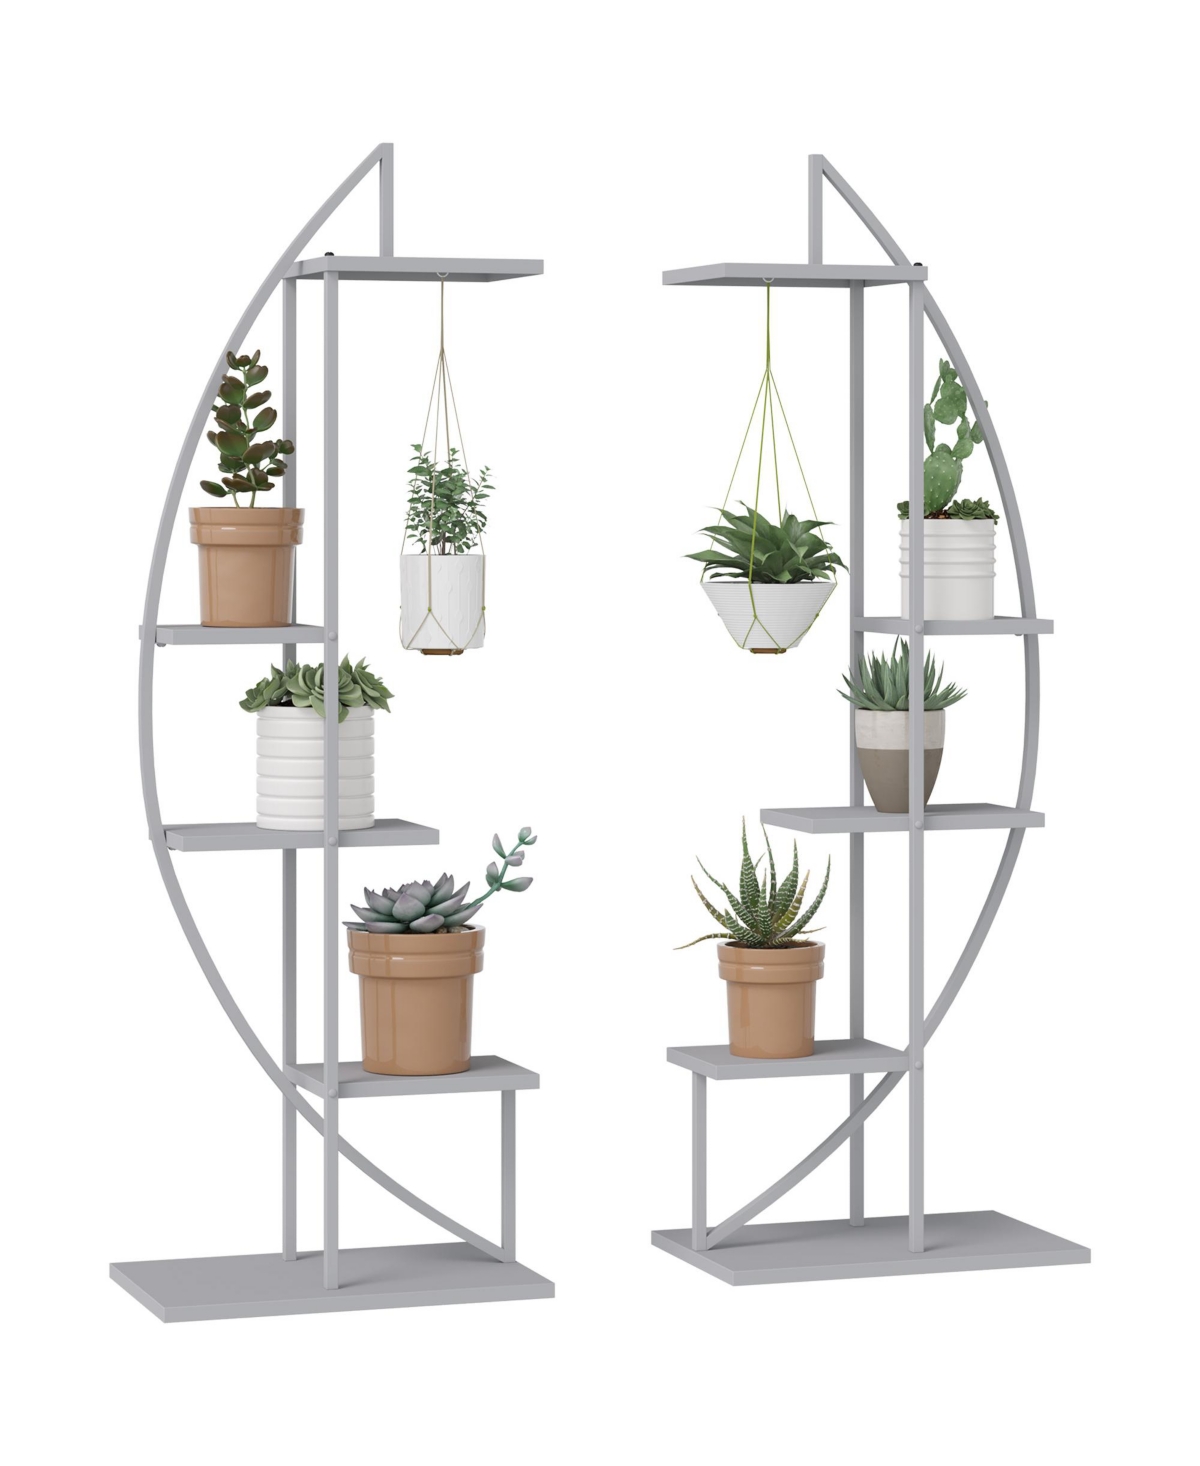 5 Tier Metal Plant Stand Half Moon Shape Ladder Flower Pot Holder Shelf for Indoor Outdoor Patio Lawn Garden Balcony Decor, 2 Pack, Grey - Gr